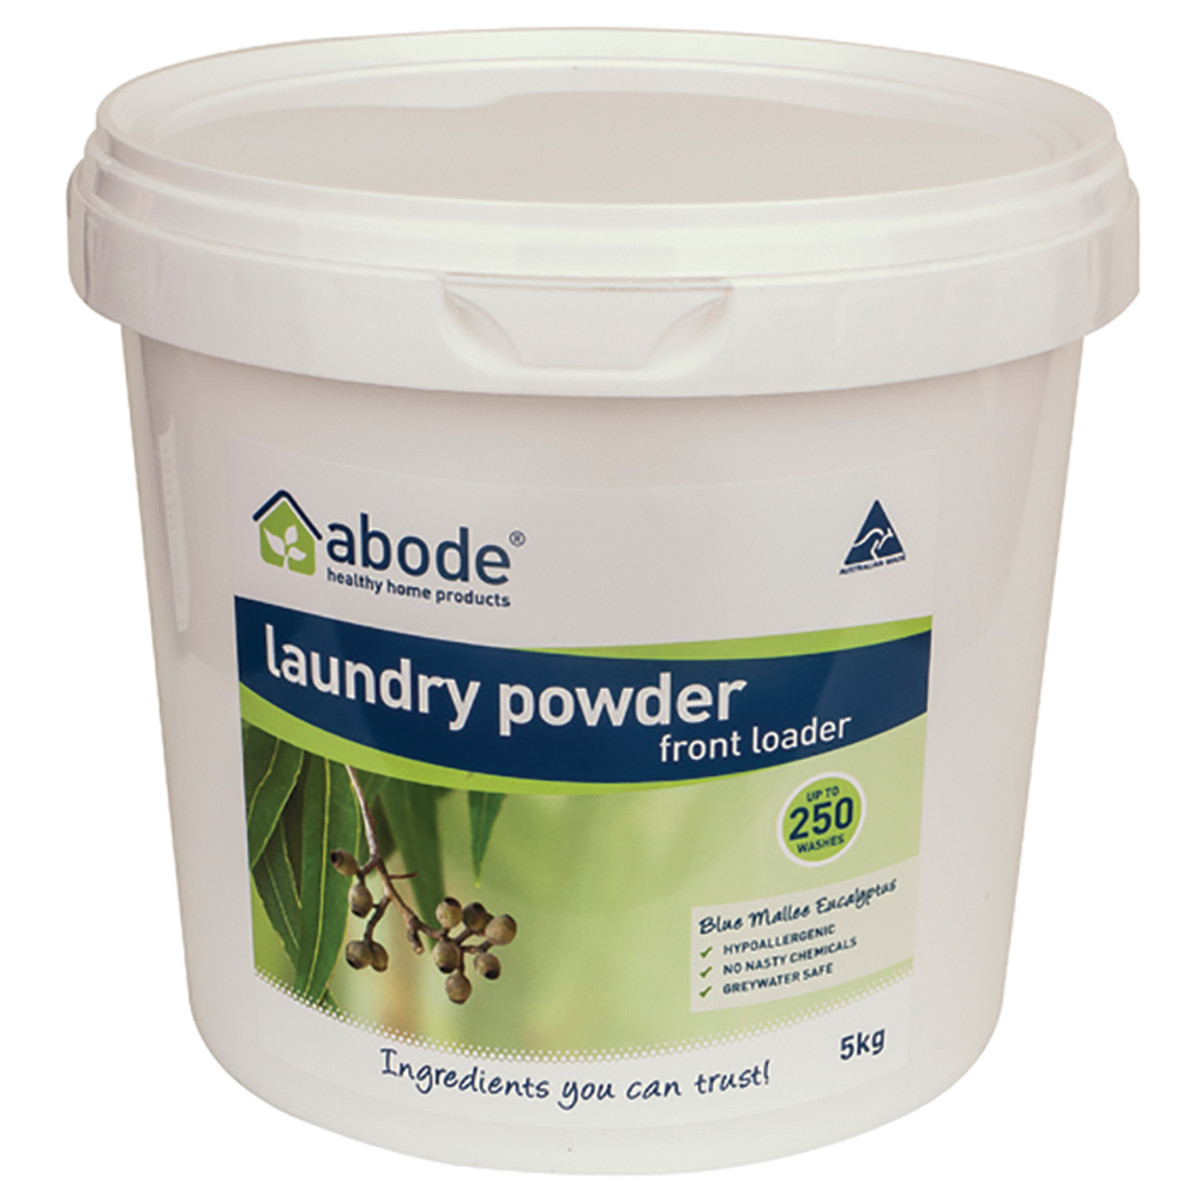 ABODE - Laundry Powder (Front & Top Loader) Blue Mallee Eucalyptus 5kg Bucket